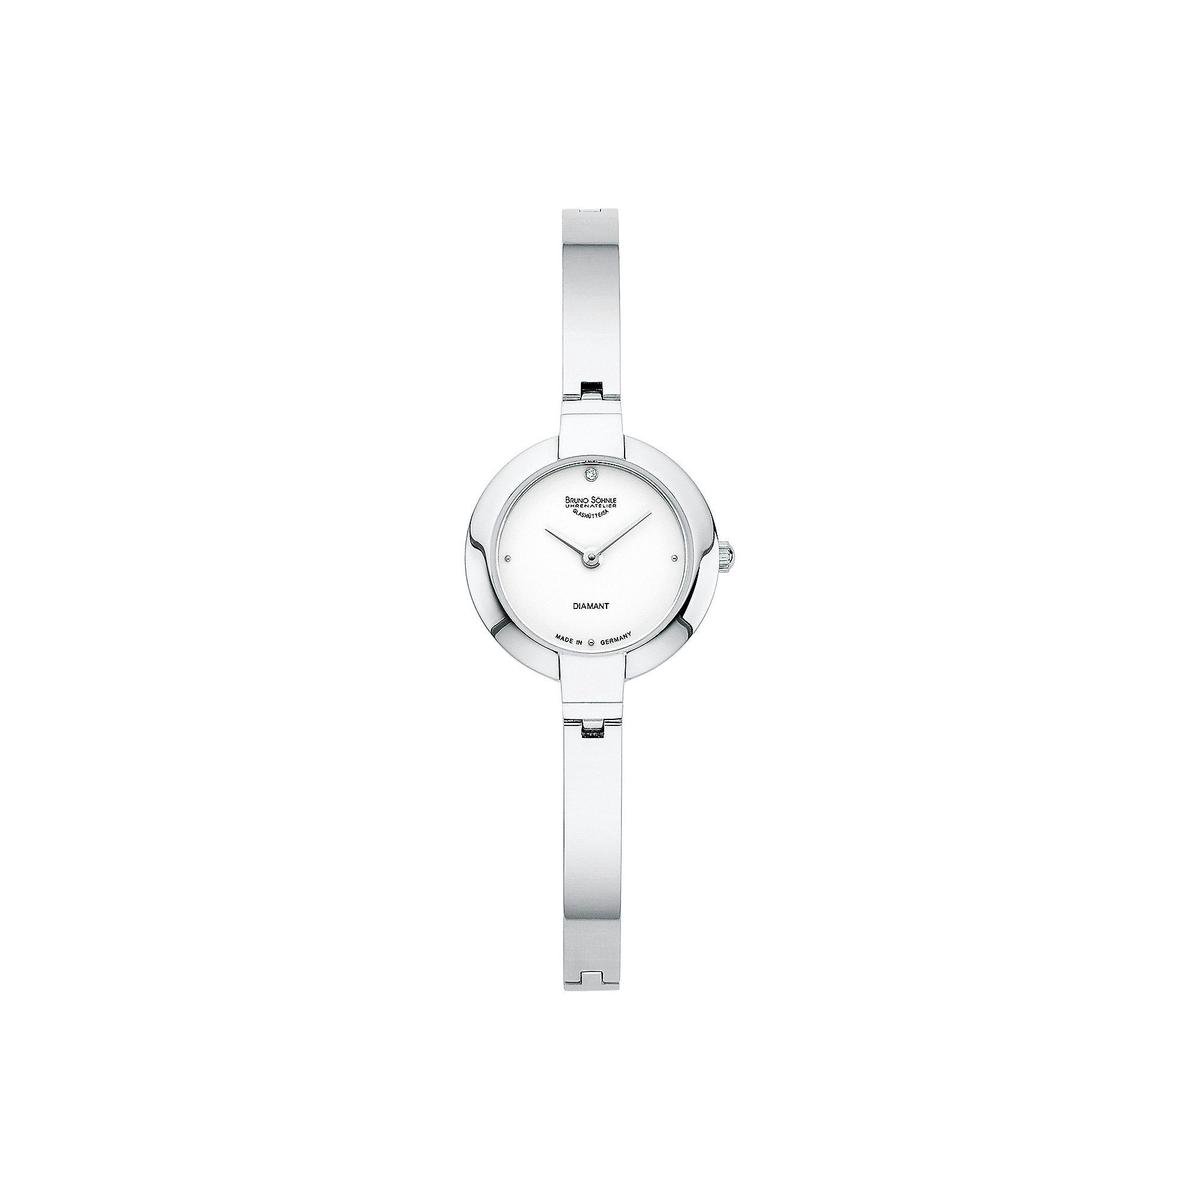 Bruno Soehnle dames horloges quartz analoog One Size 87952631